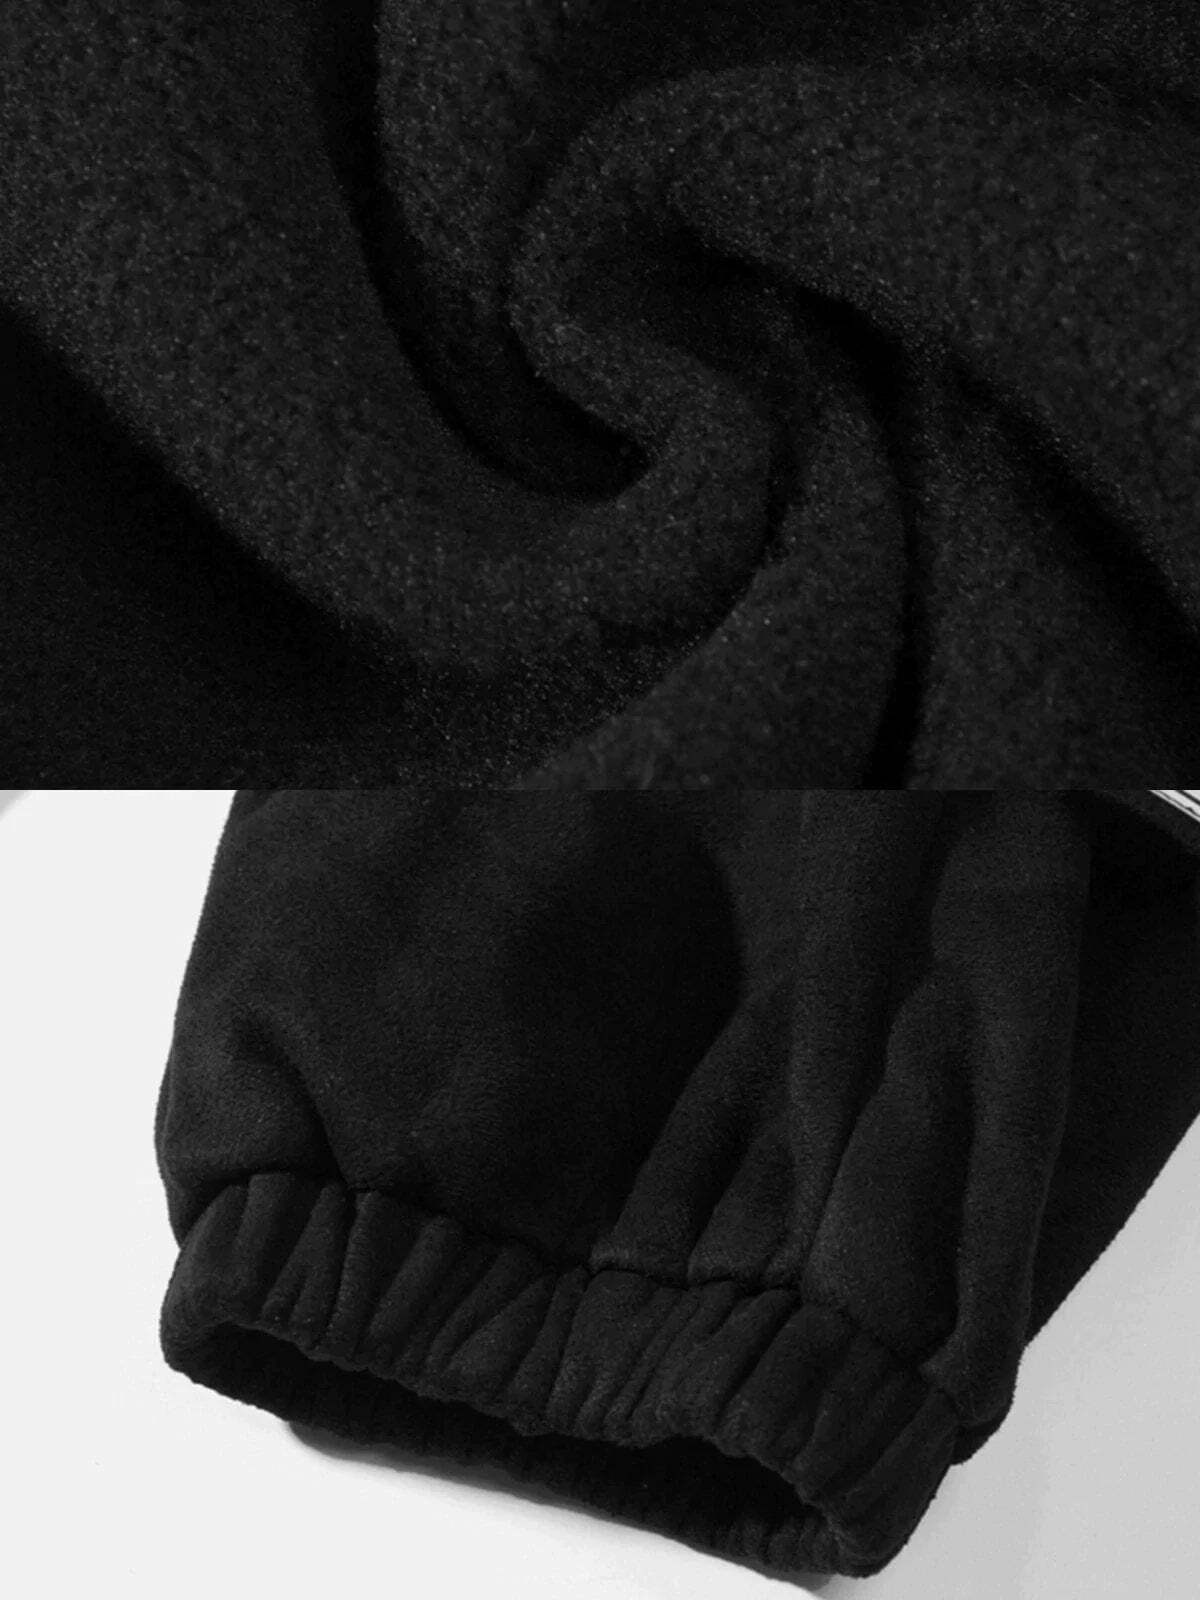 custom suede sweatpants labeled design & urban style 2687